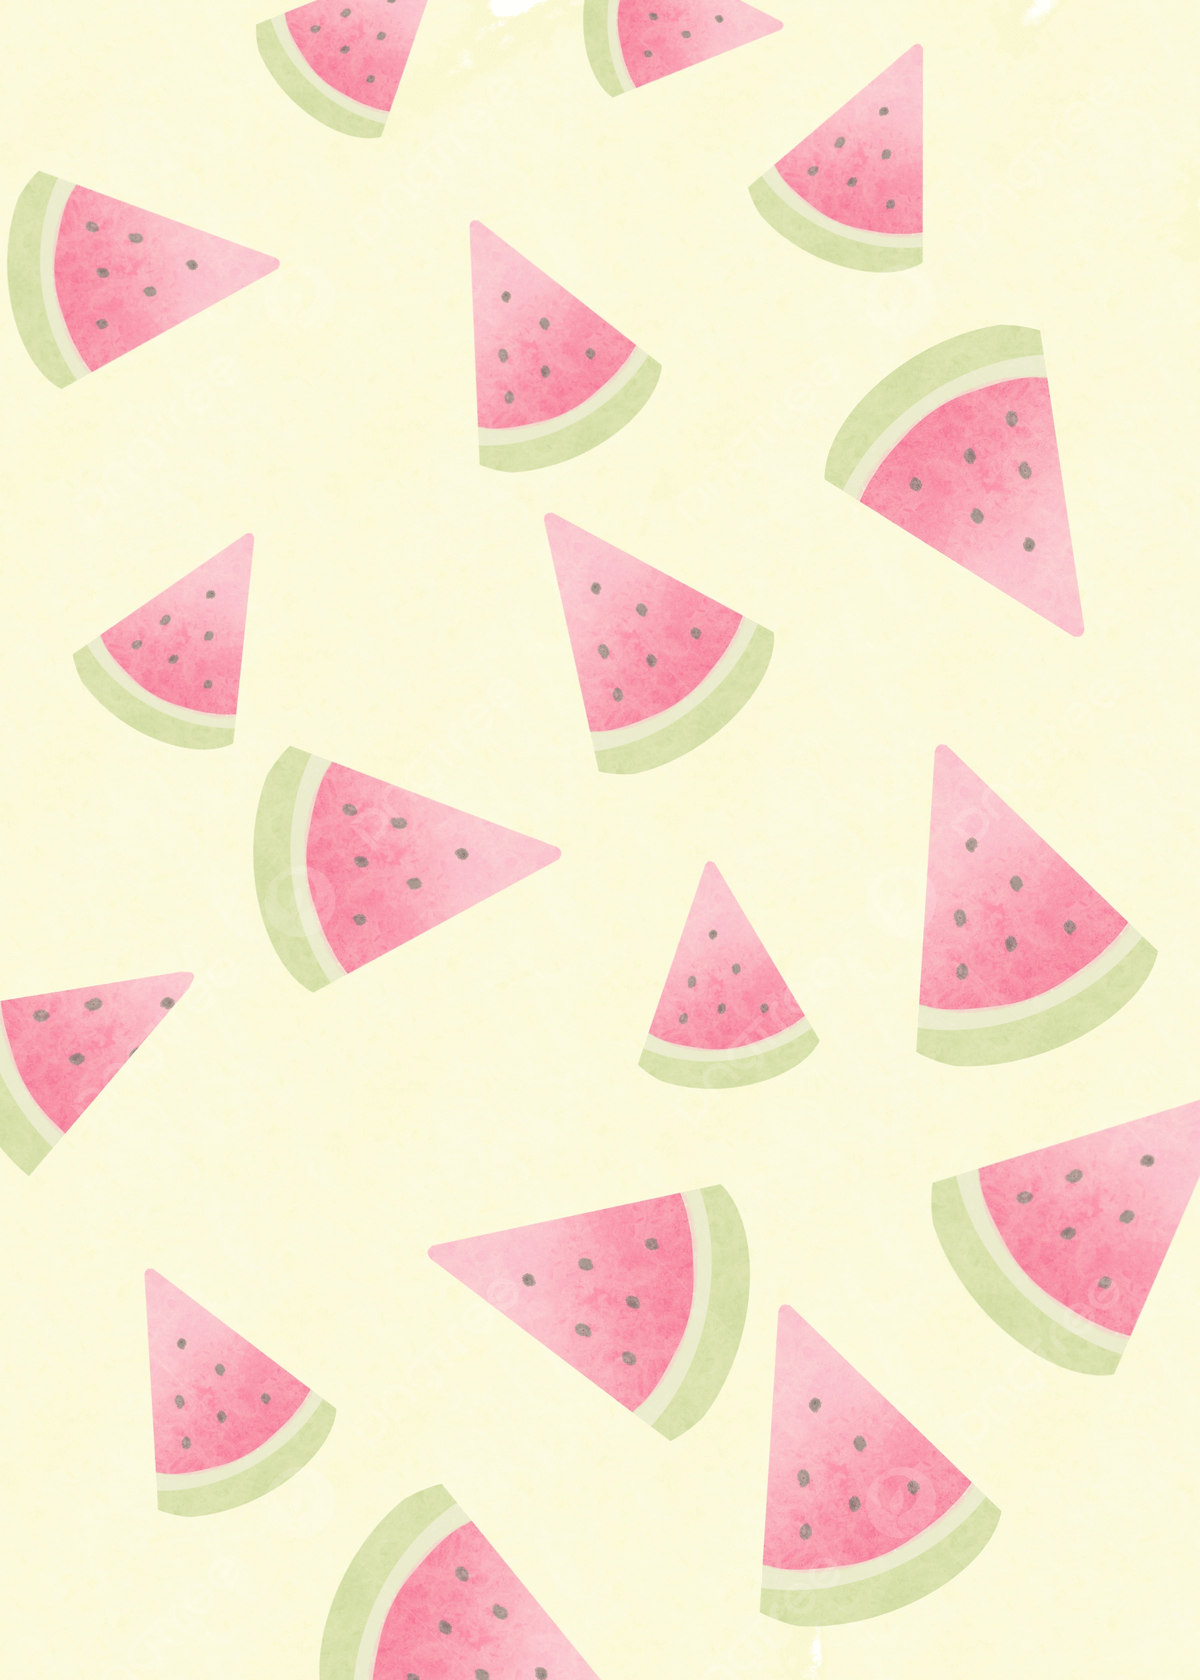 Watermelon Cute Simple Wallpaper Background, Watermelon, Wallpaper, Vintage Background Image for Free Download